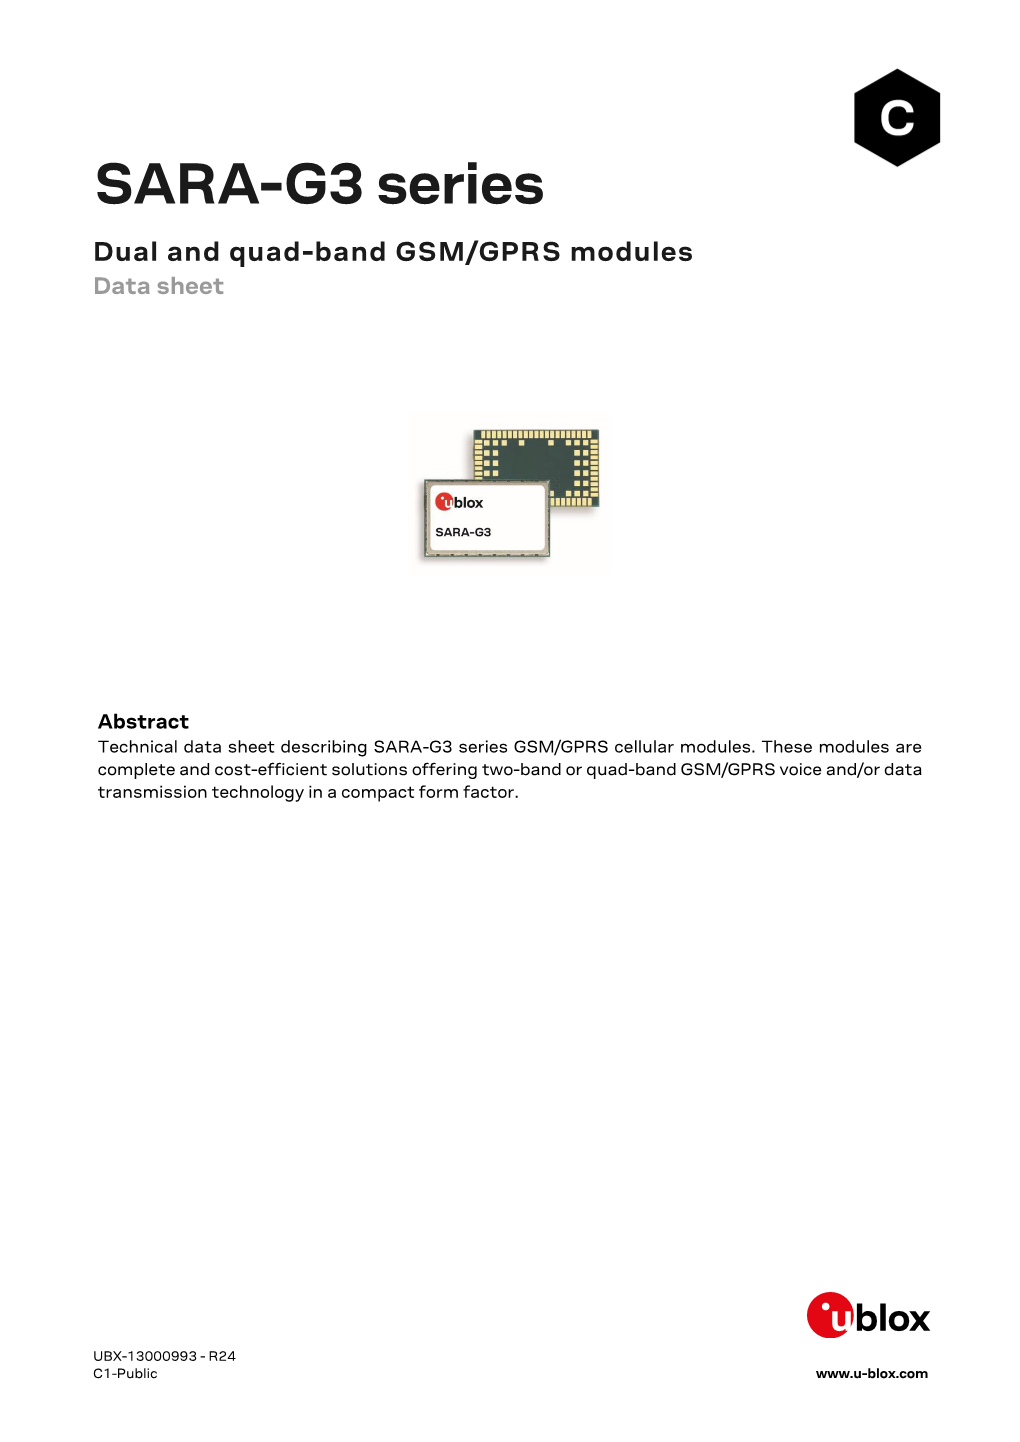 SARA-G3 Series Dual and Quad-Band GSM/GPRS Modules Data Sheet